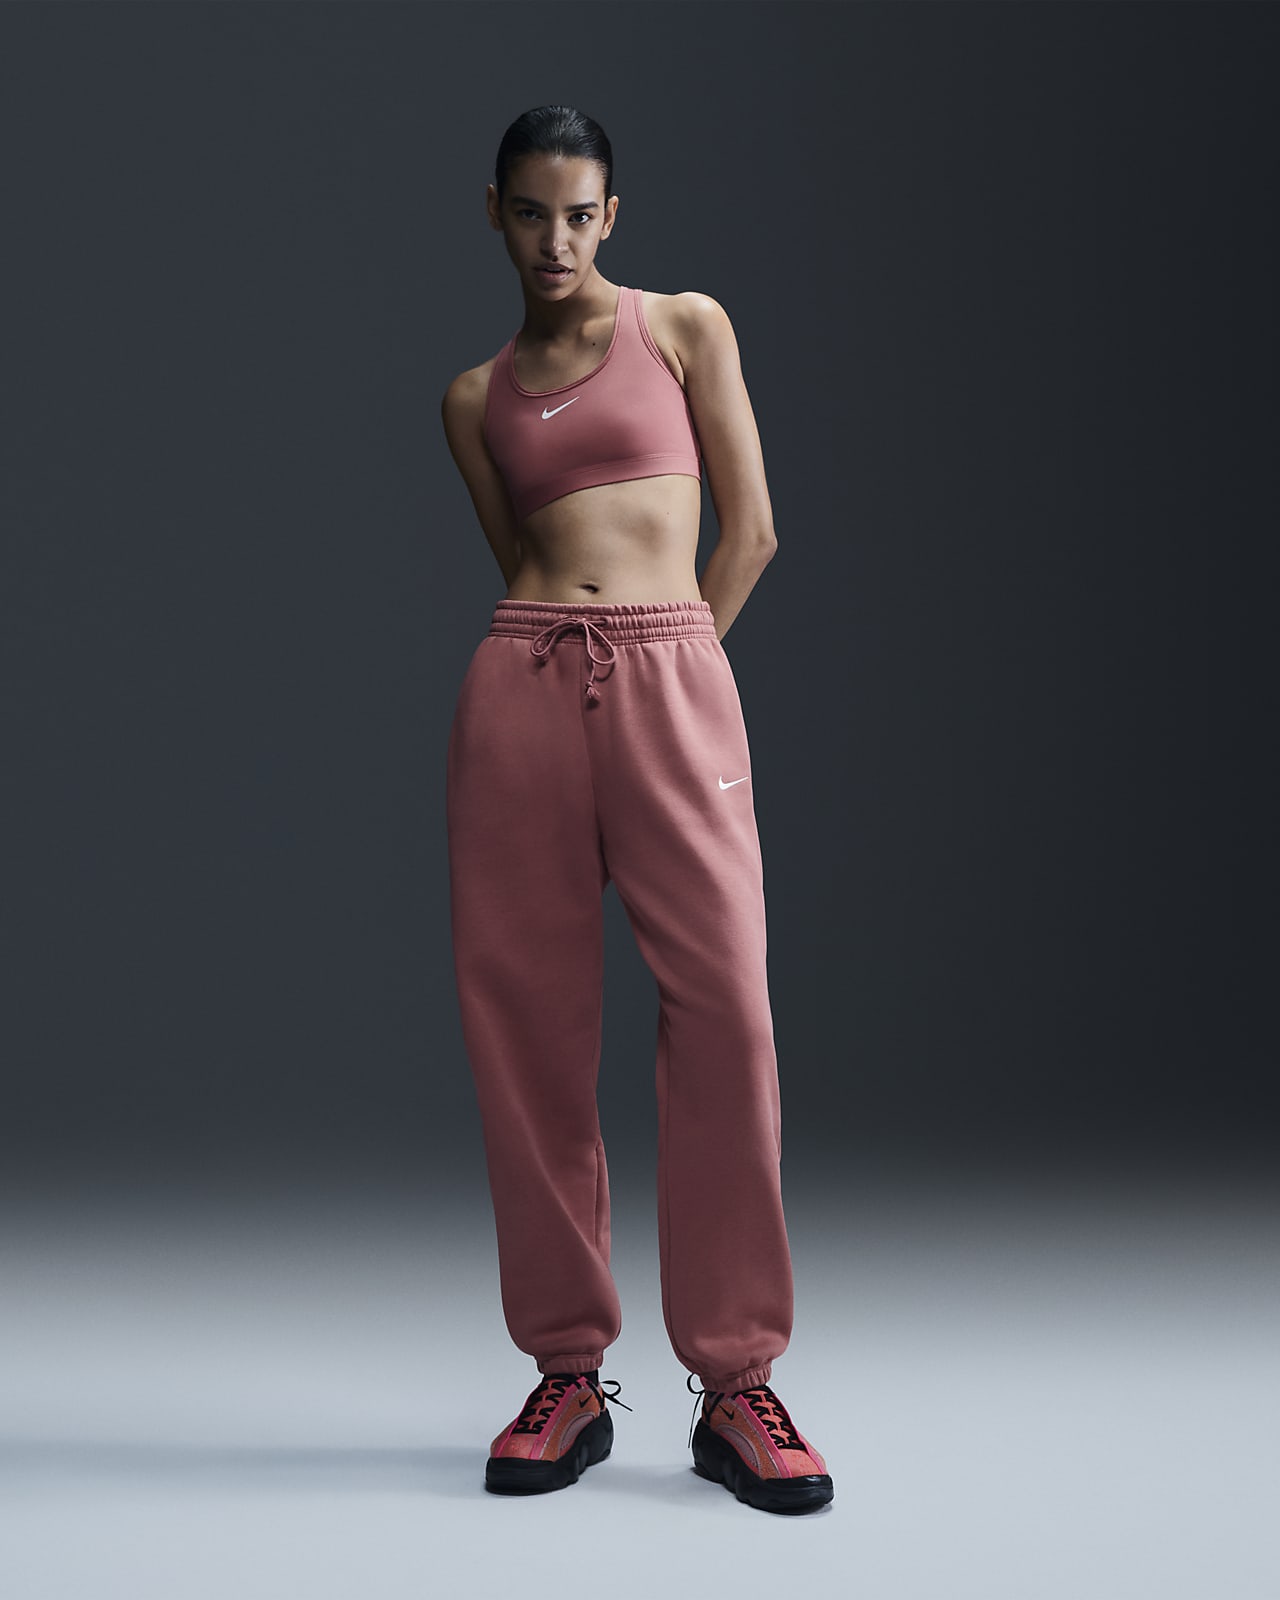 Pants de entrenamiento oversized de tiro alto para mujer Nike Sportswear Phoenix Fleece